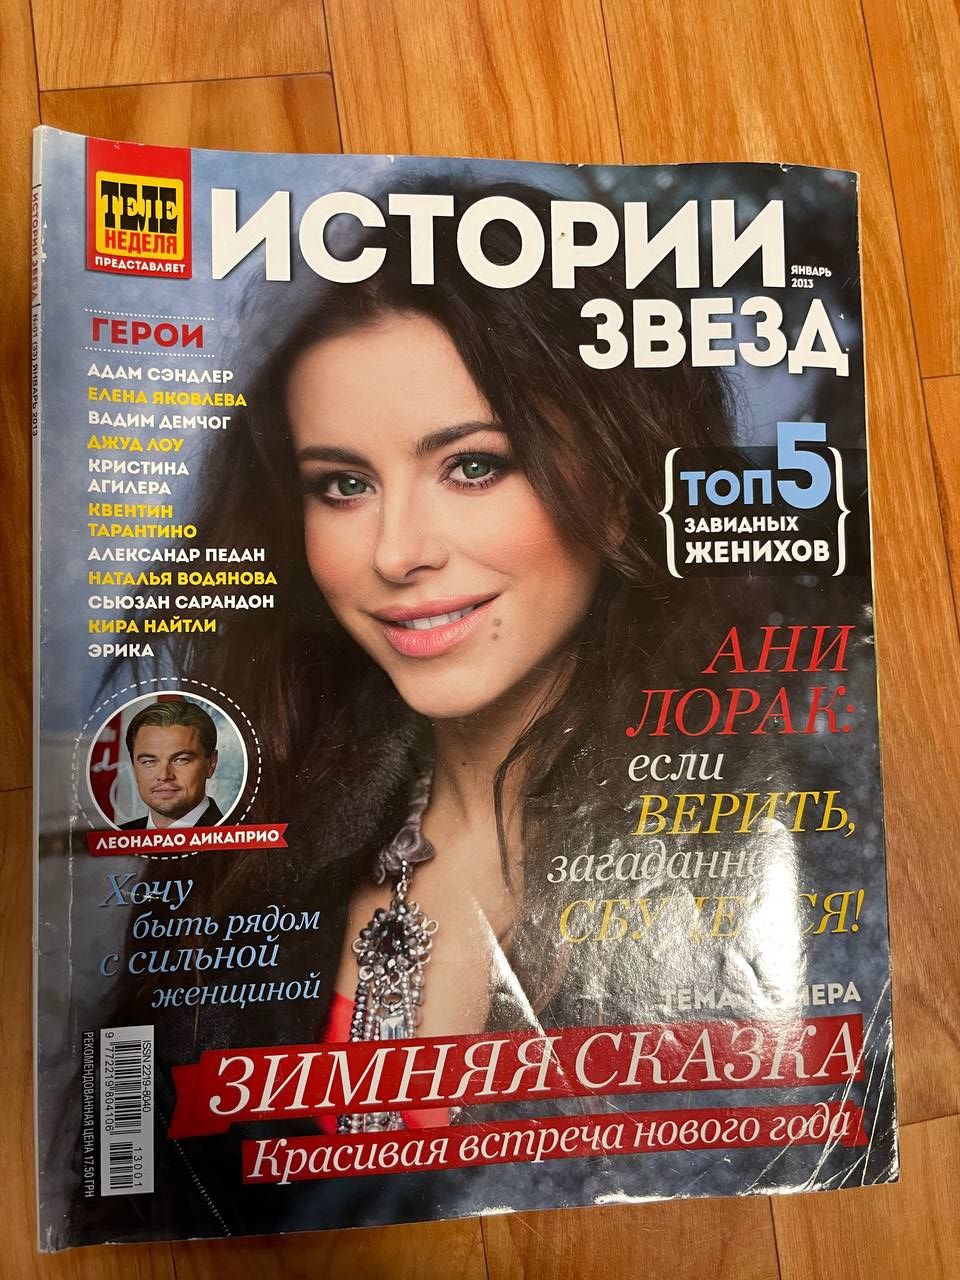 Журналы с Ани Лорак раритет - 120 грн/ед